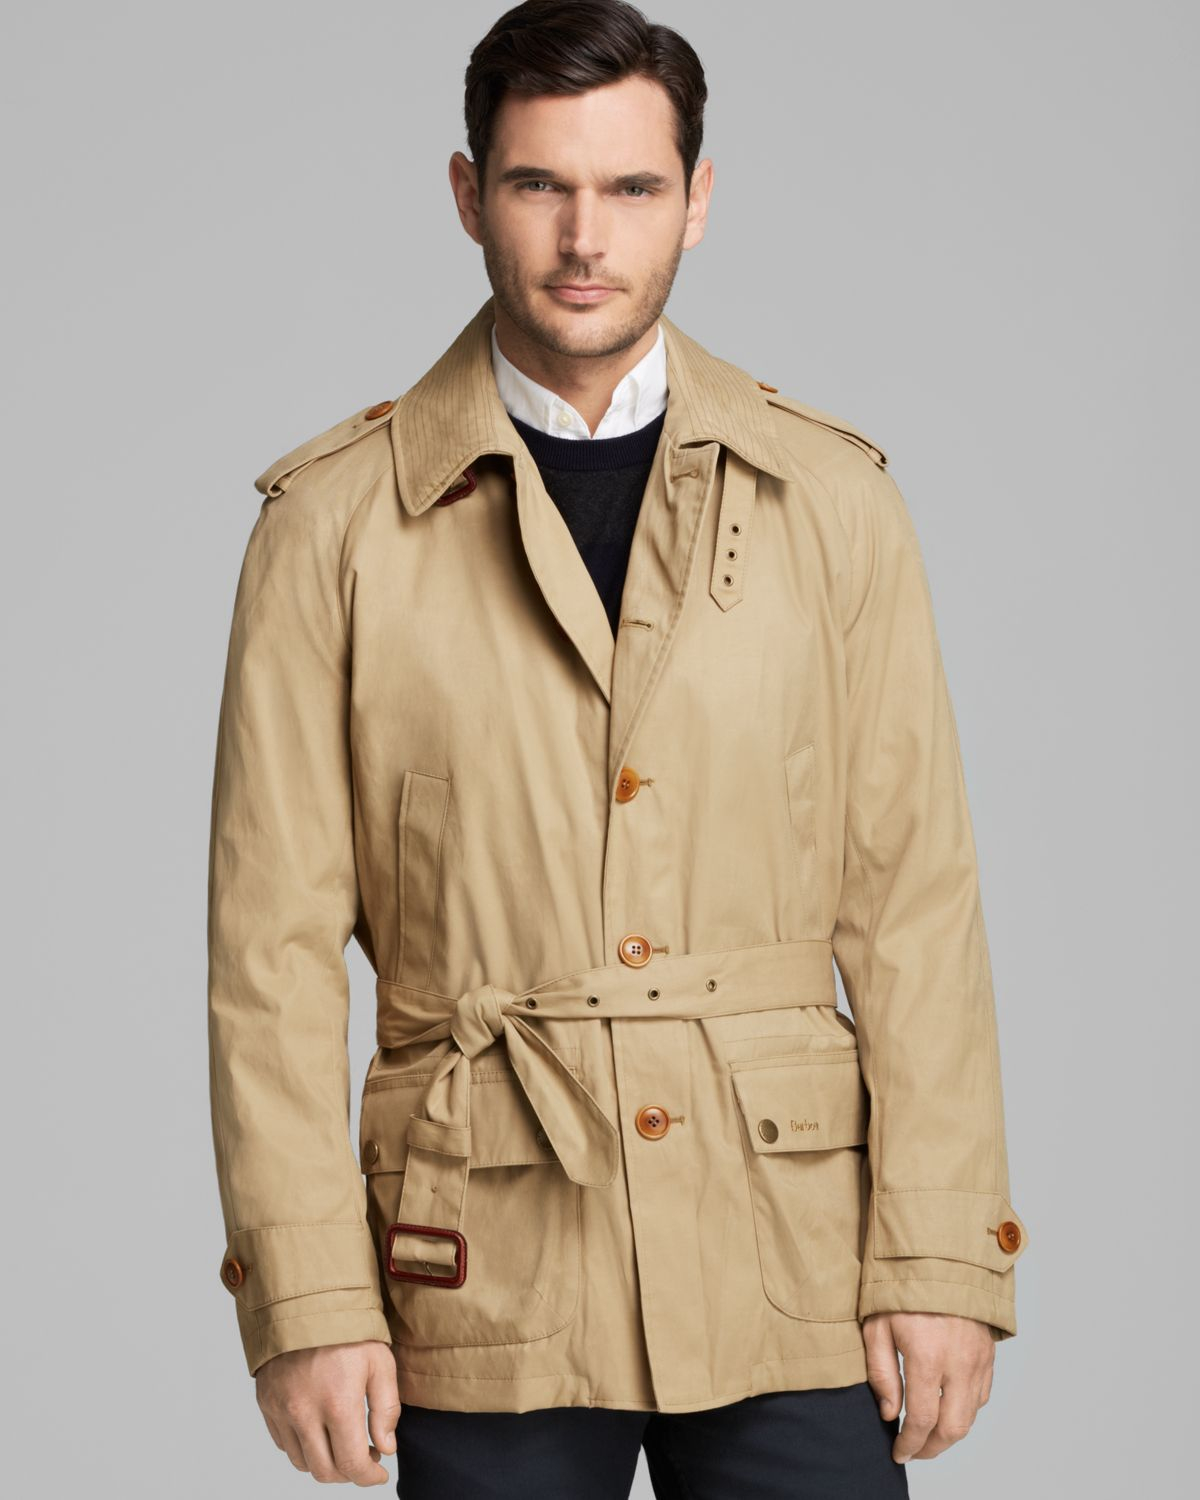 barbour jacket mens raincoat